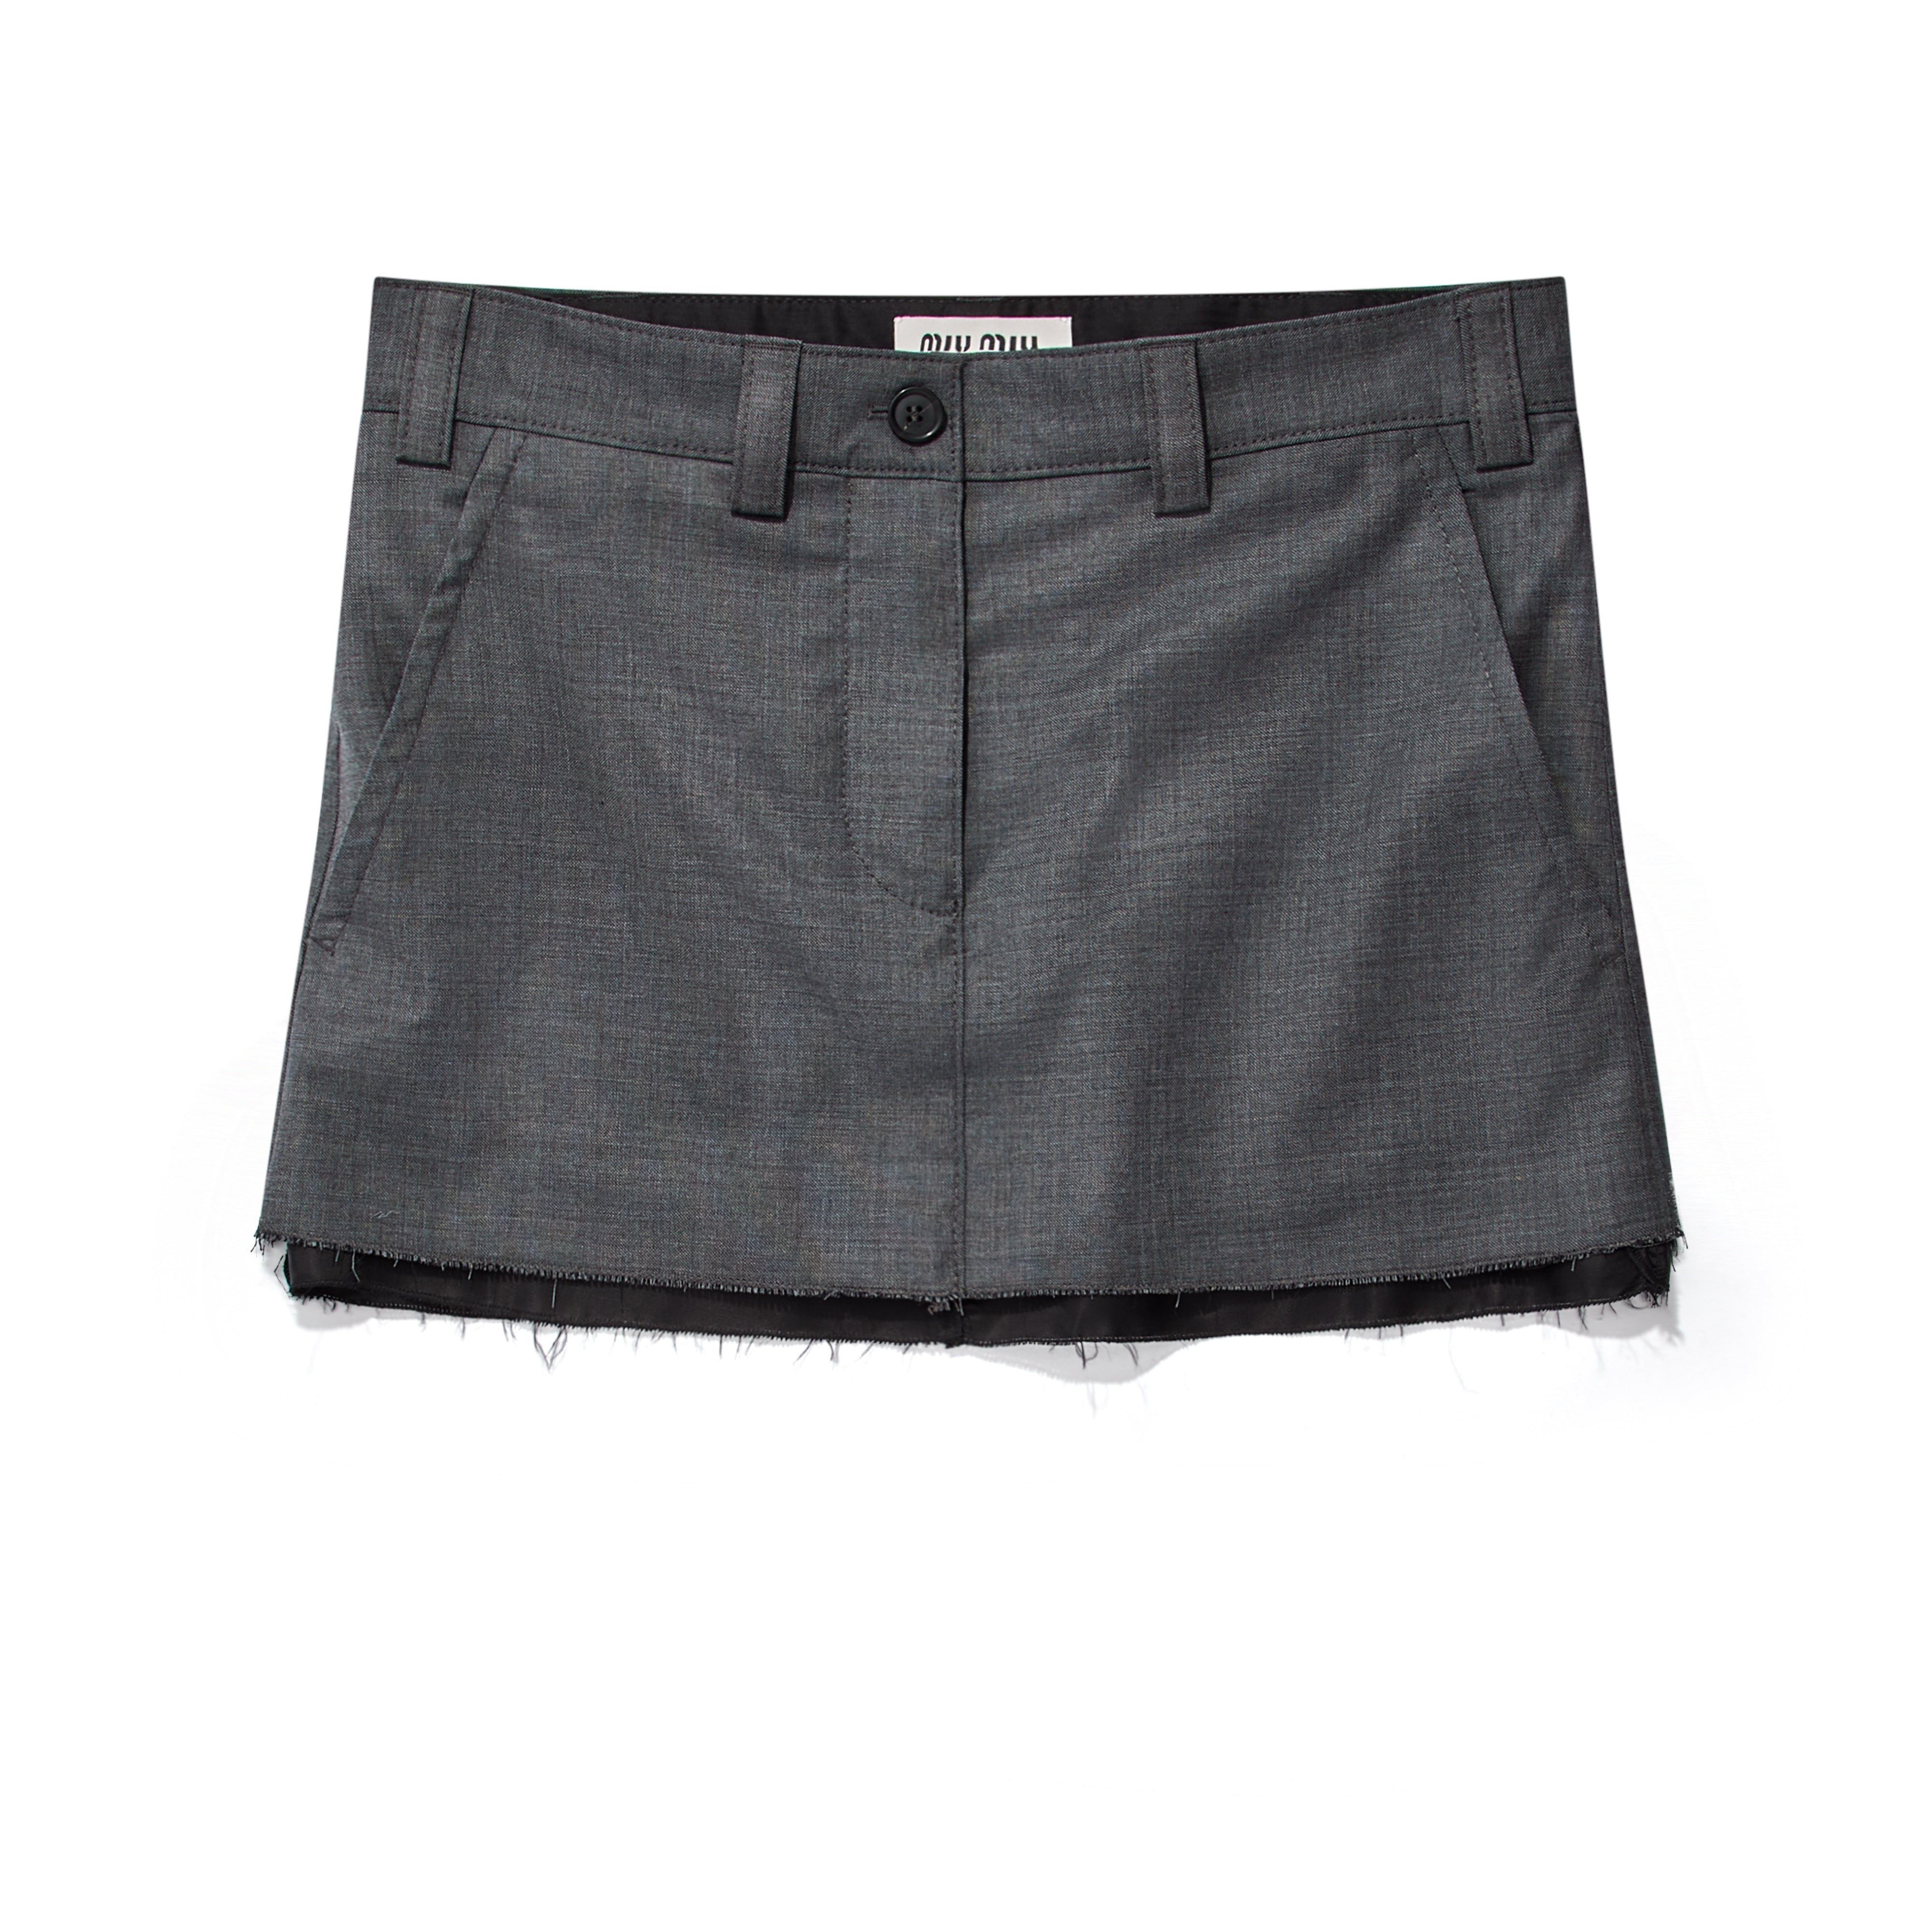 Miu Miu - Women’s Wool Skirt - (Slate)